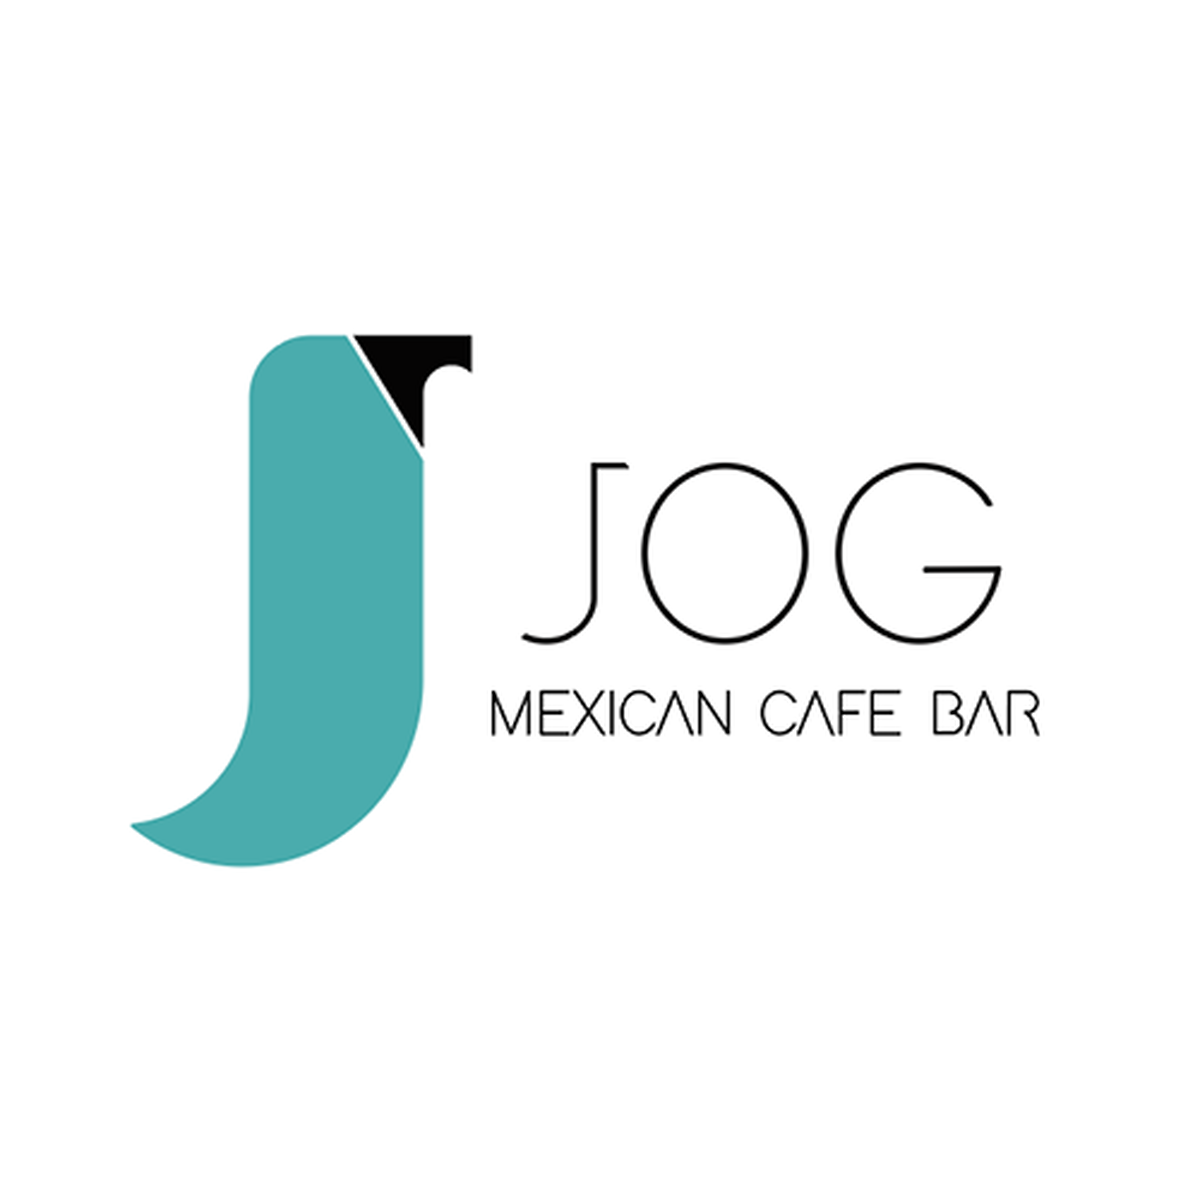 Mexican Cafe Bar Jog